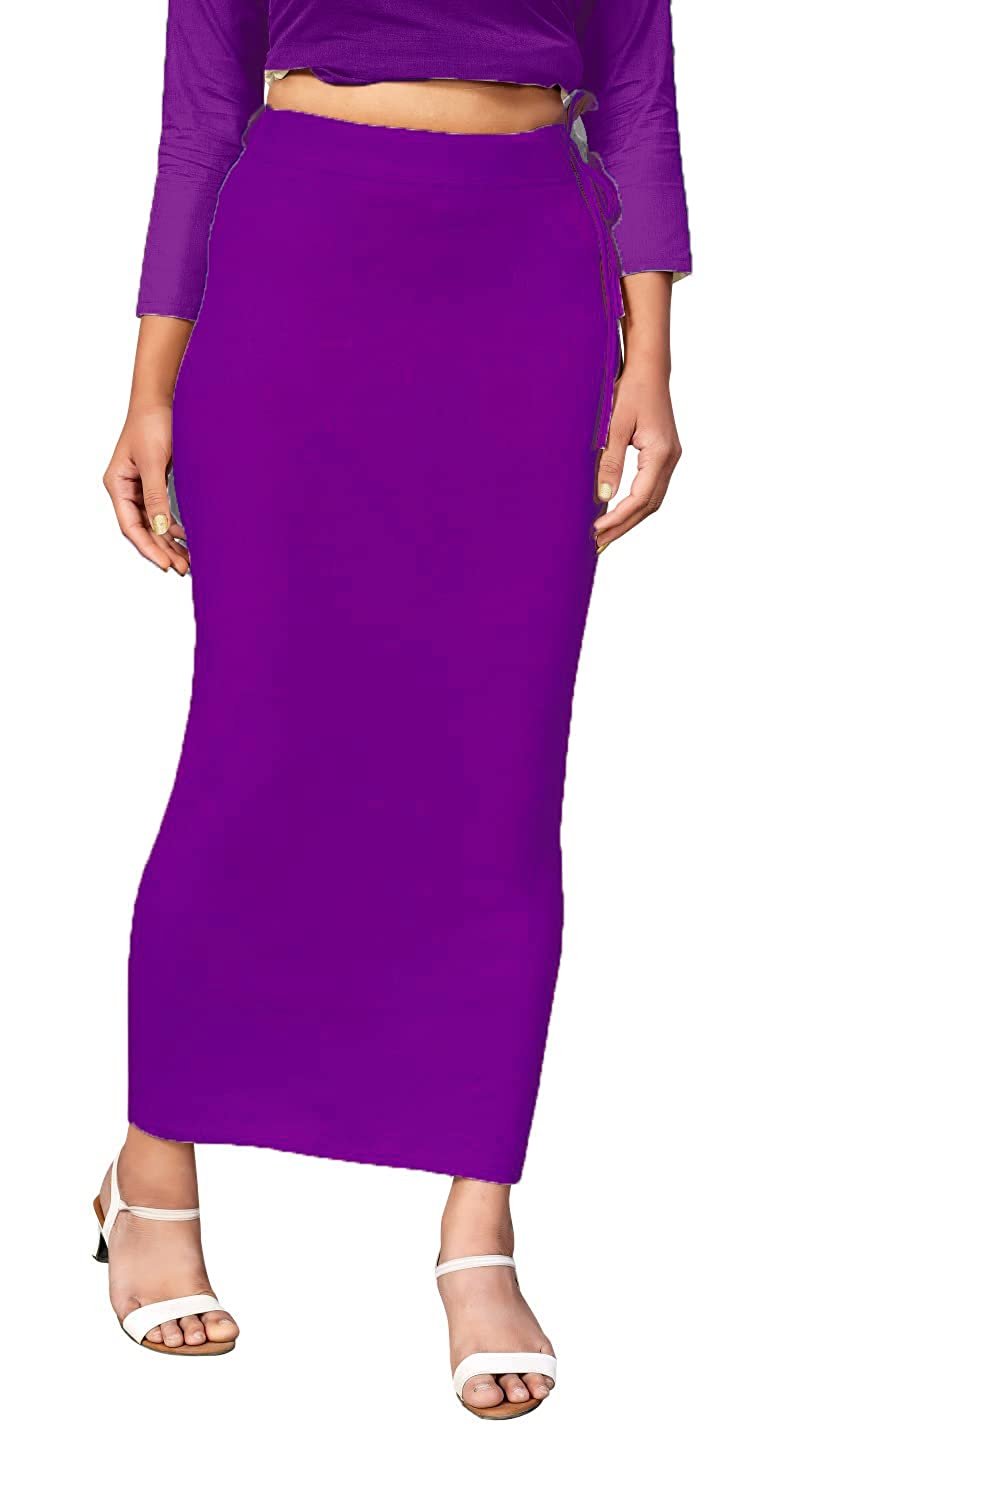 Saree Shapewear - Purple - Swapna Creation